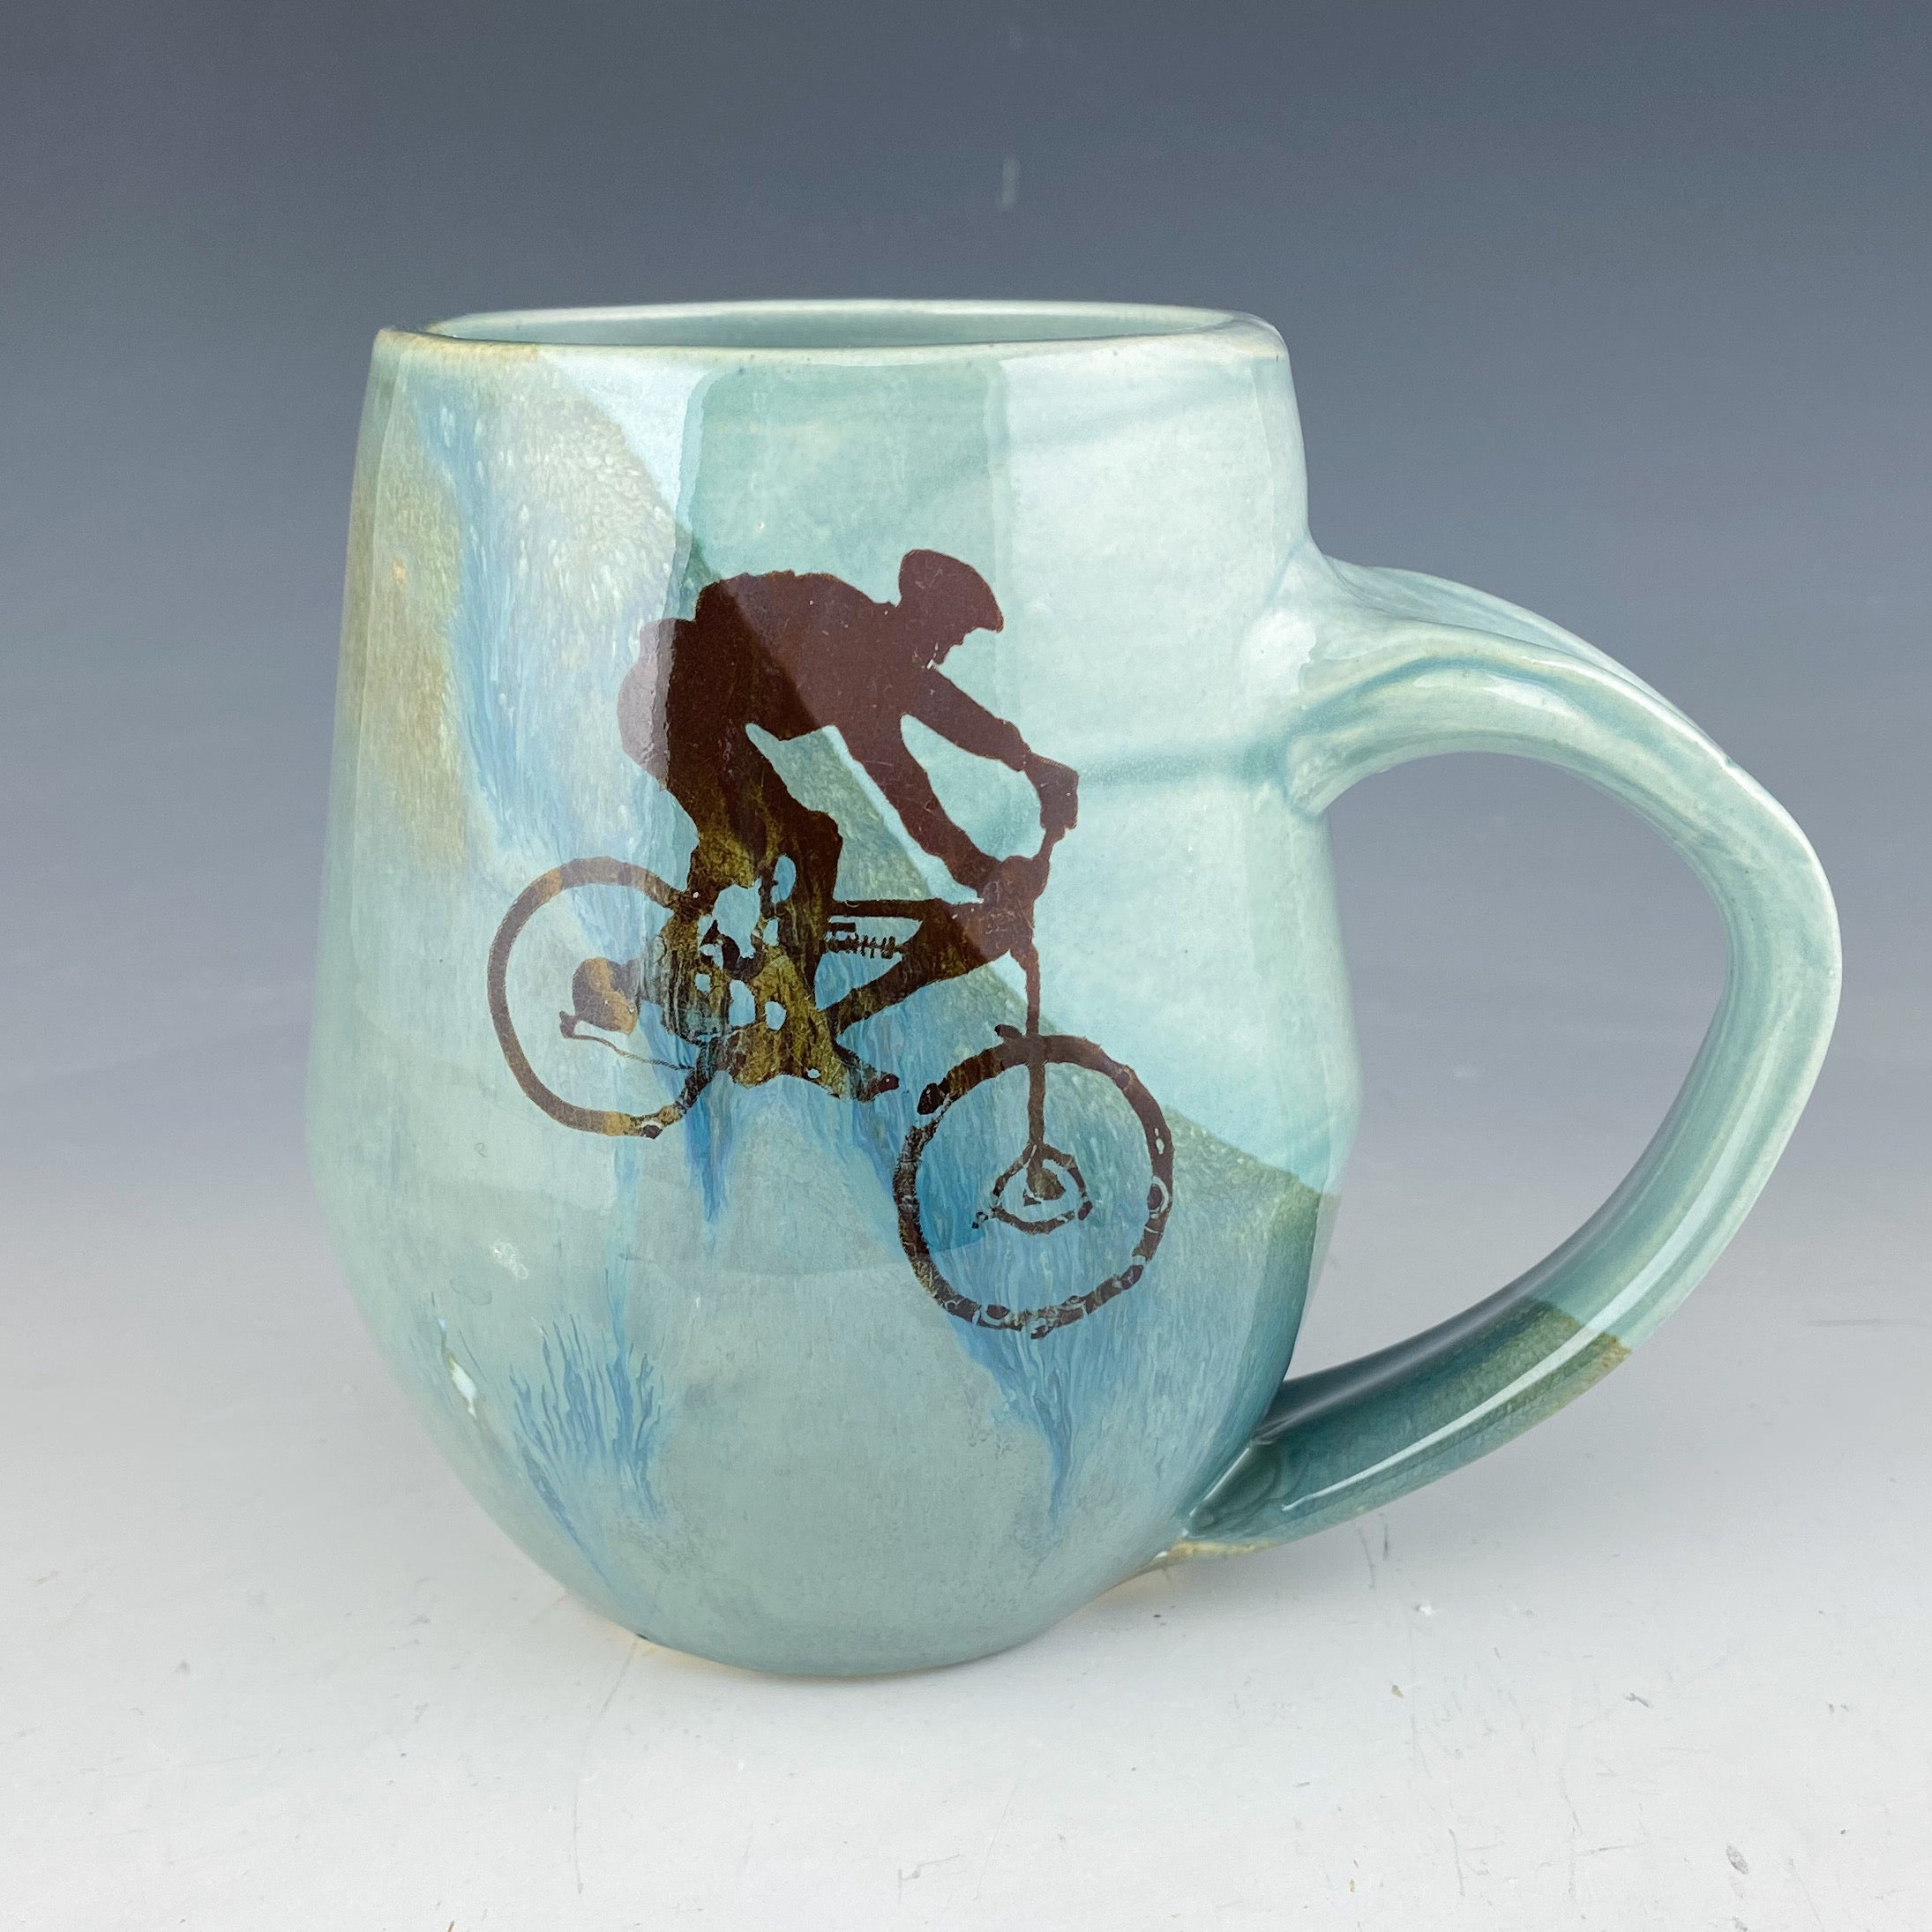 Mountain Bike Mug in Blue and Brown